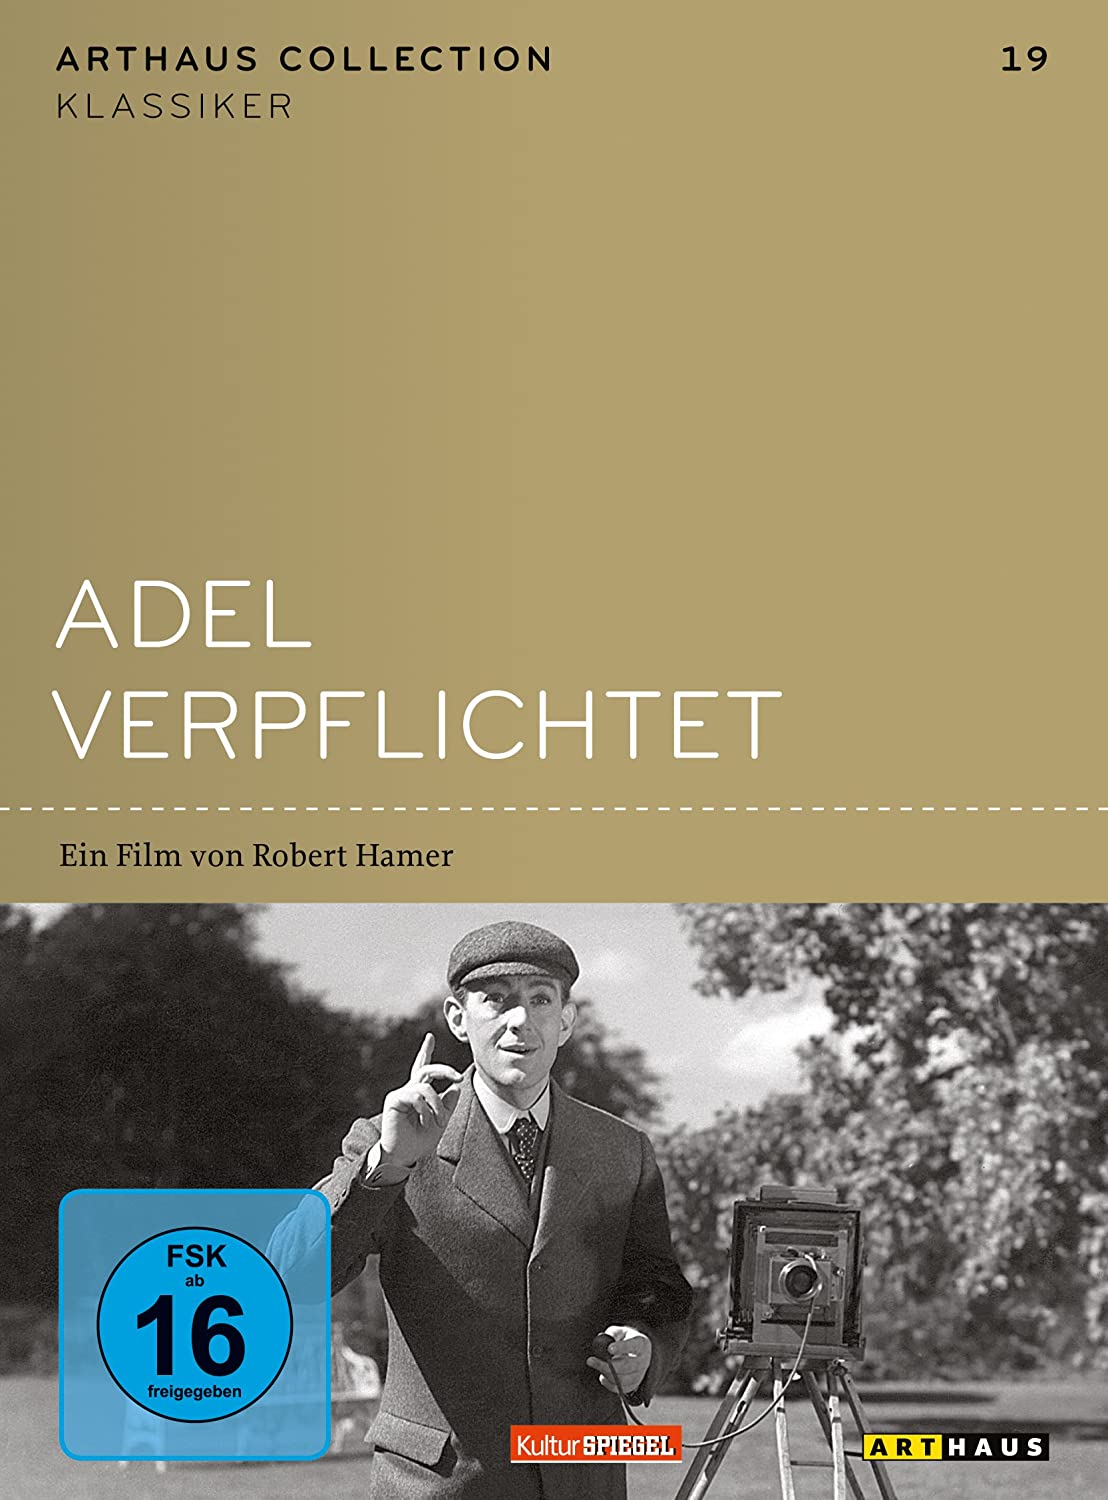 Adel verpflichtet - Arthaus Collection Klassiker Nr. 19